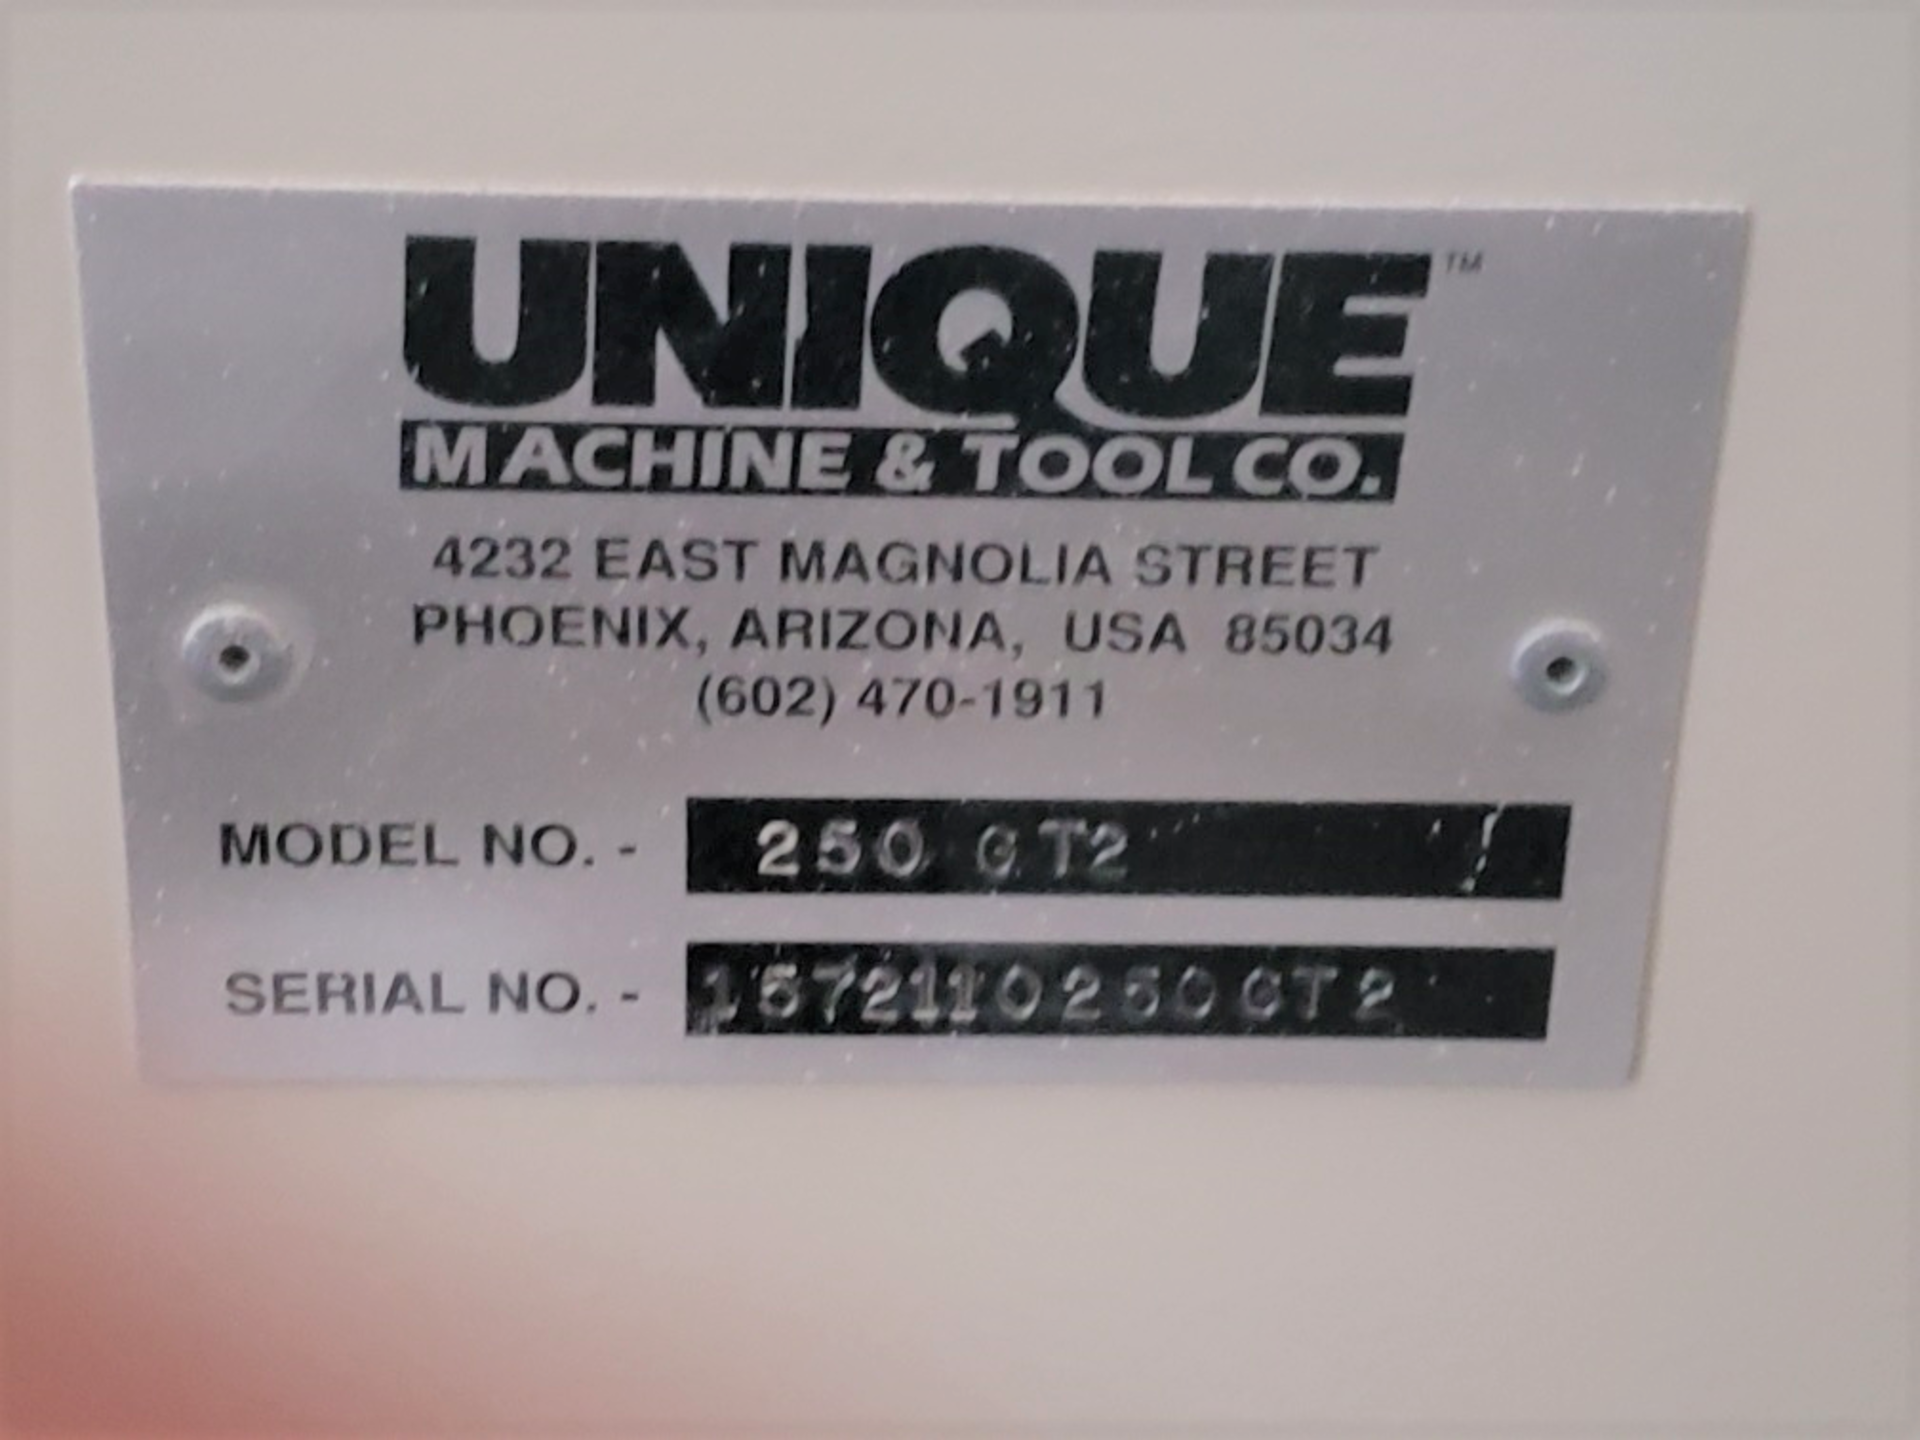 '12 UNIQUE 250 GT2 RAISED PANEL DOOR MACHINE, S/N 15721102250GT2 (EXCELLENT CONDITION) - Image 2 of 2